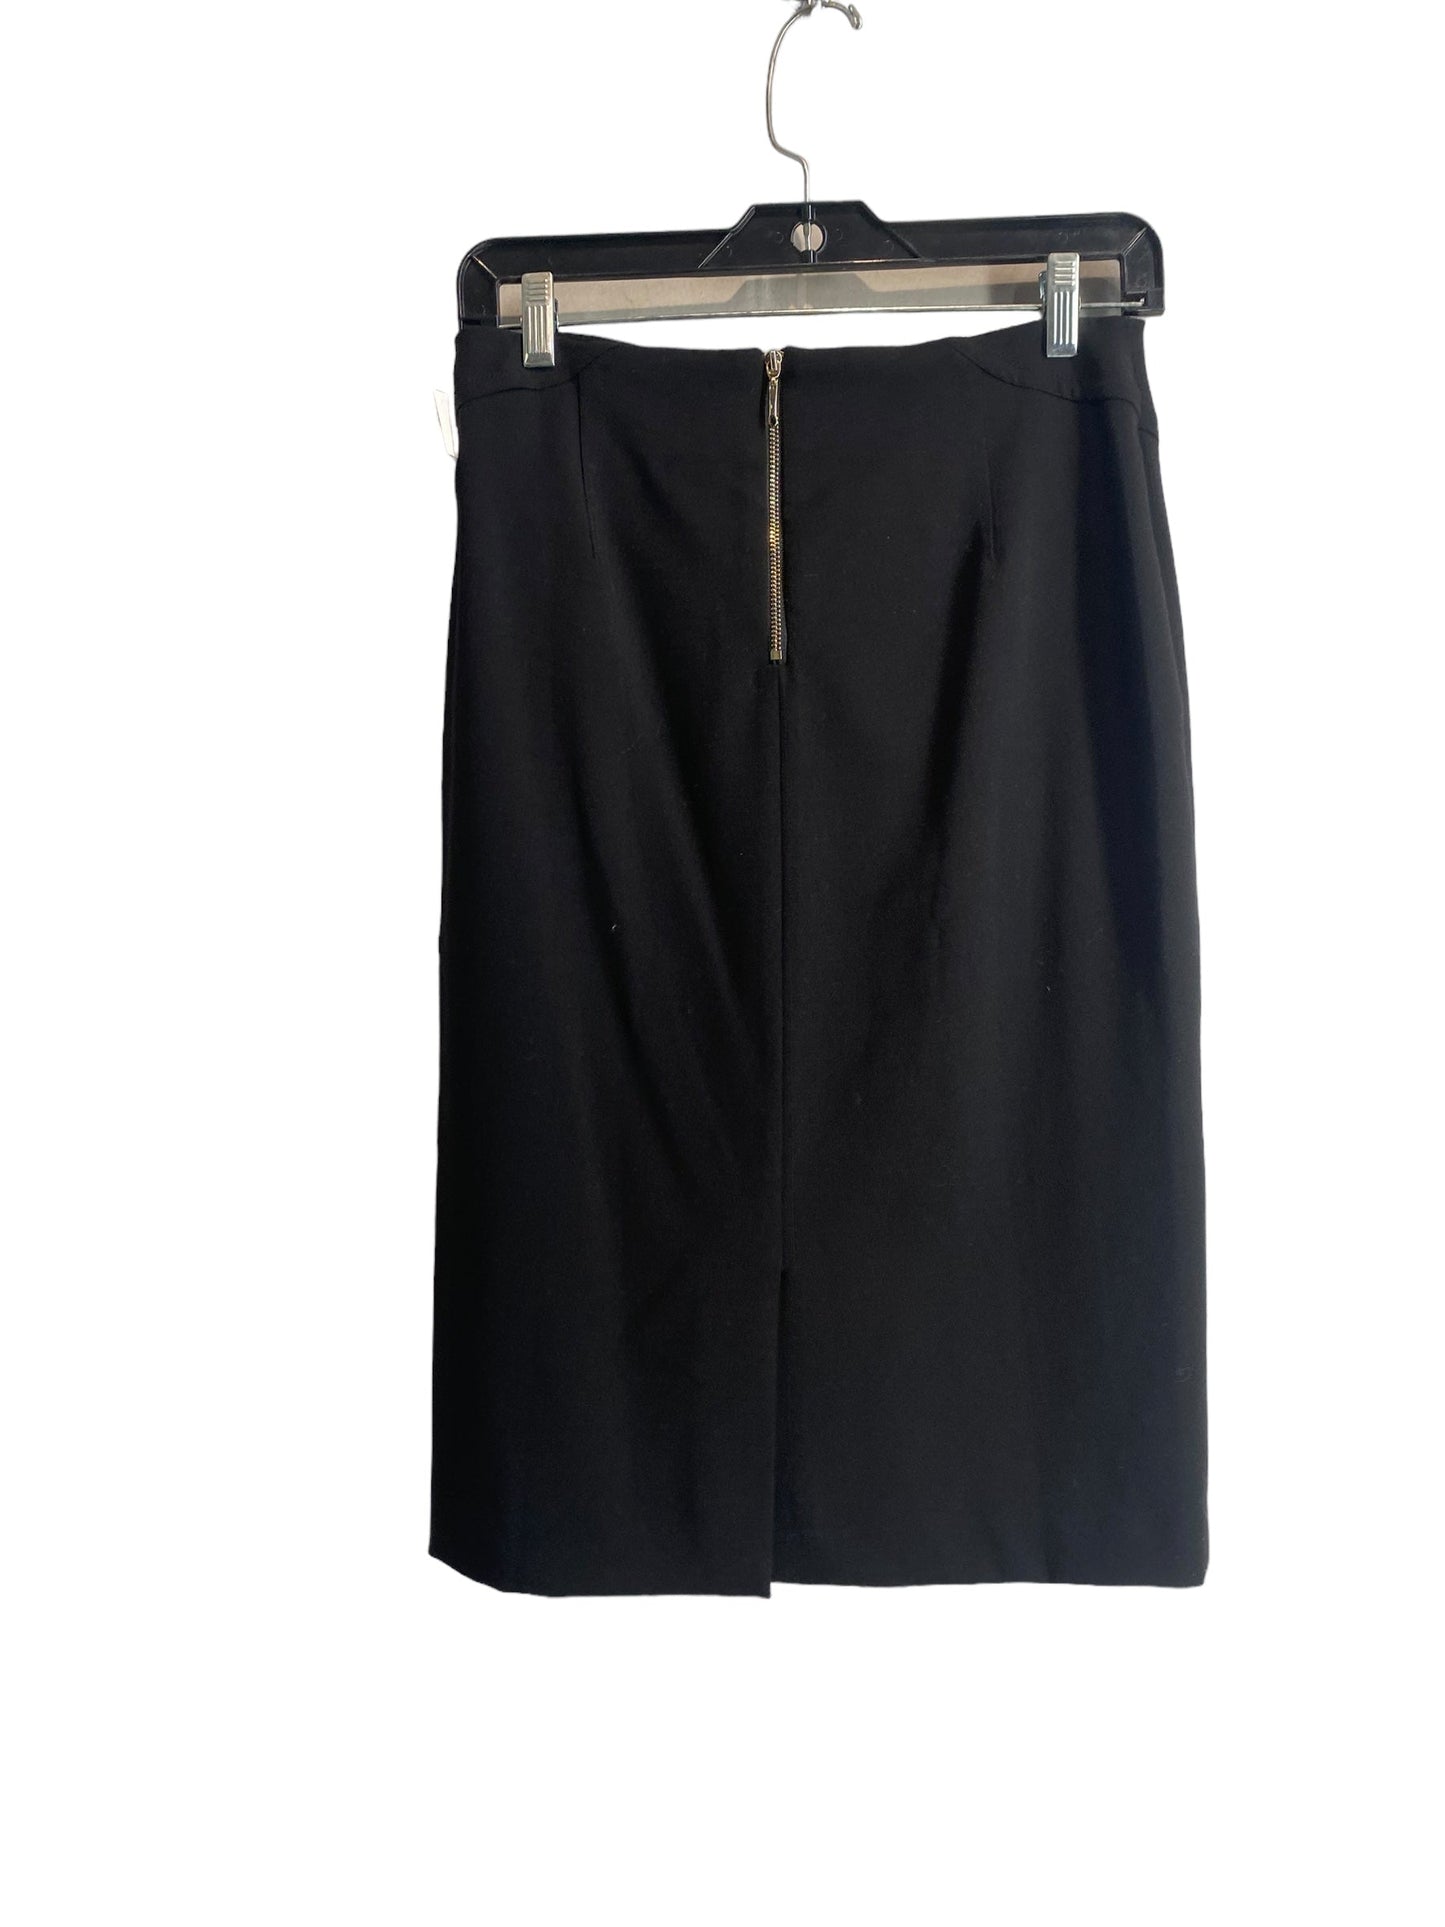 Black Skirt Midi White House Black Market, Size 2